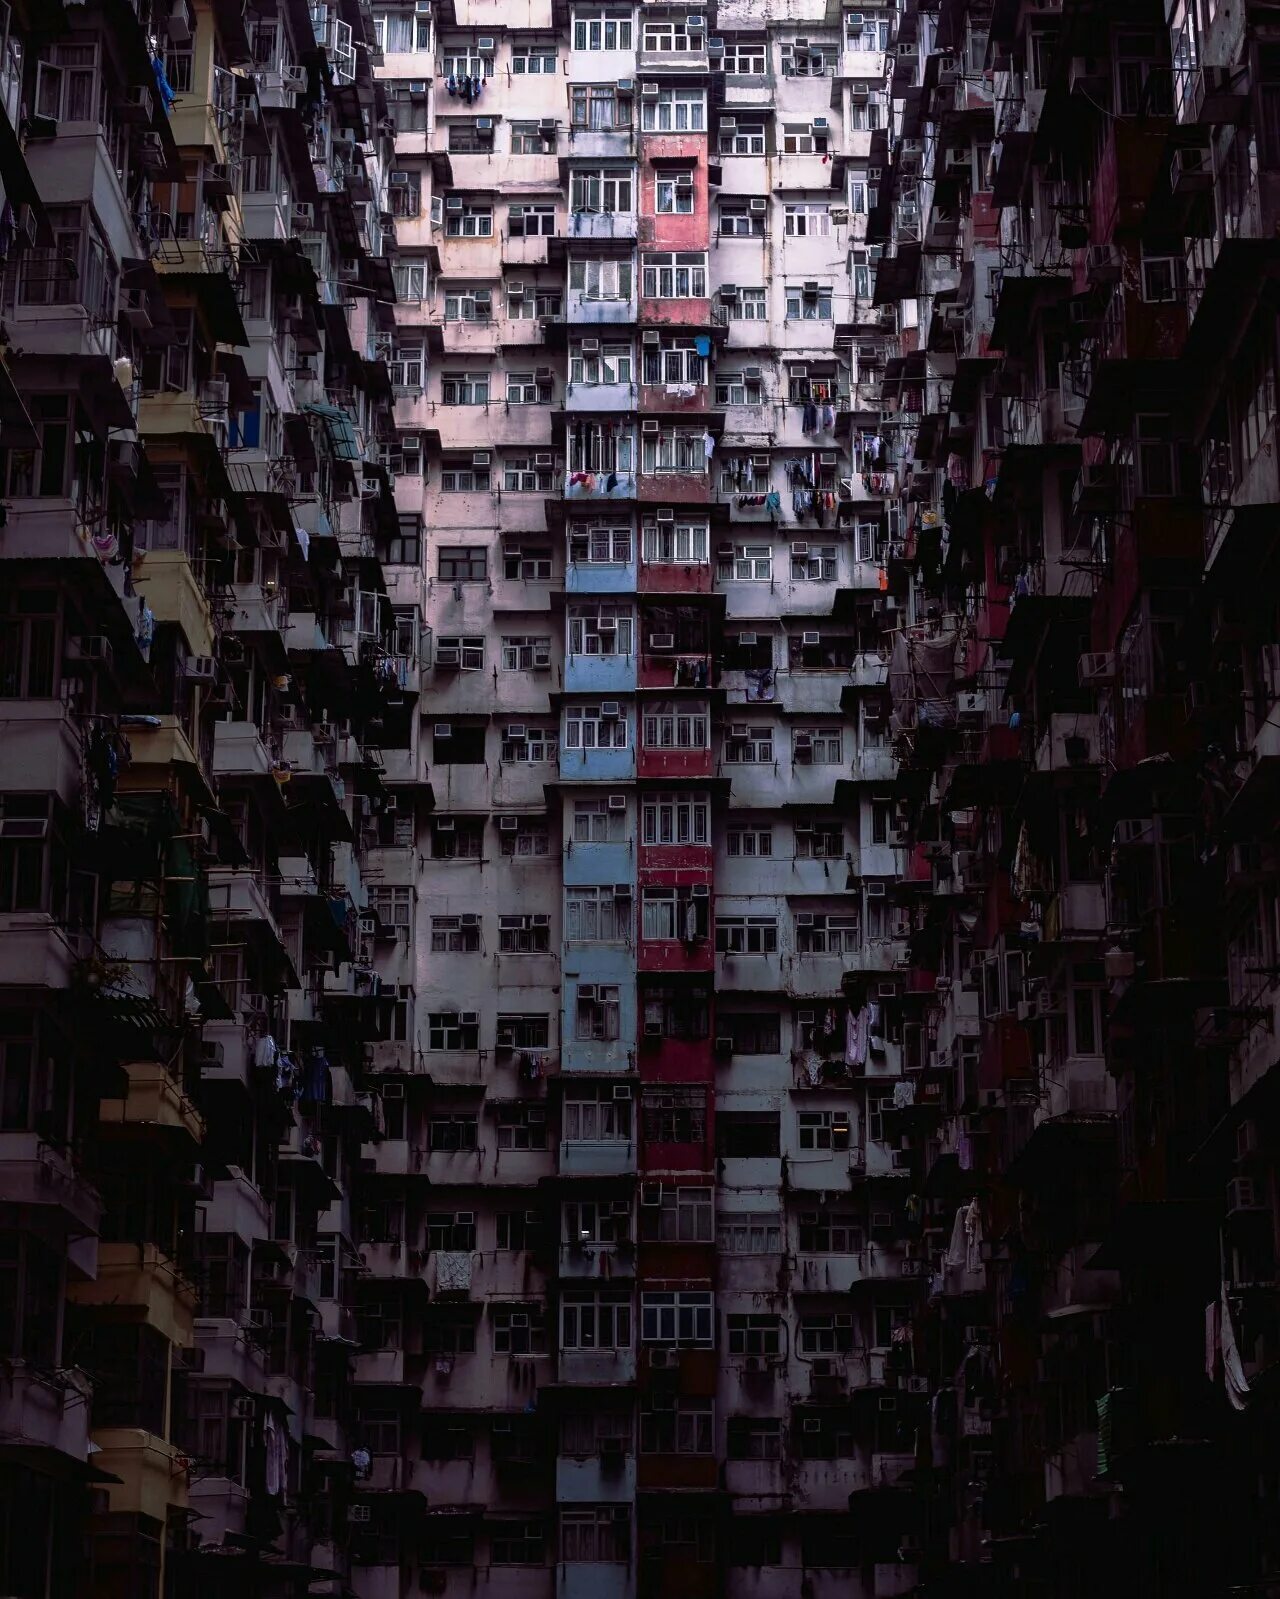 Трущобы Гонконга Коулун. Коулун человейник. Гонконг высотки трущобы. Многоэтажные трущобы Гонконга.